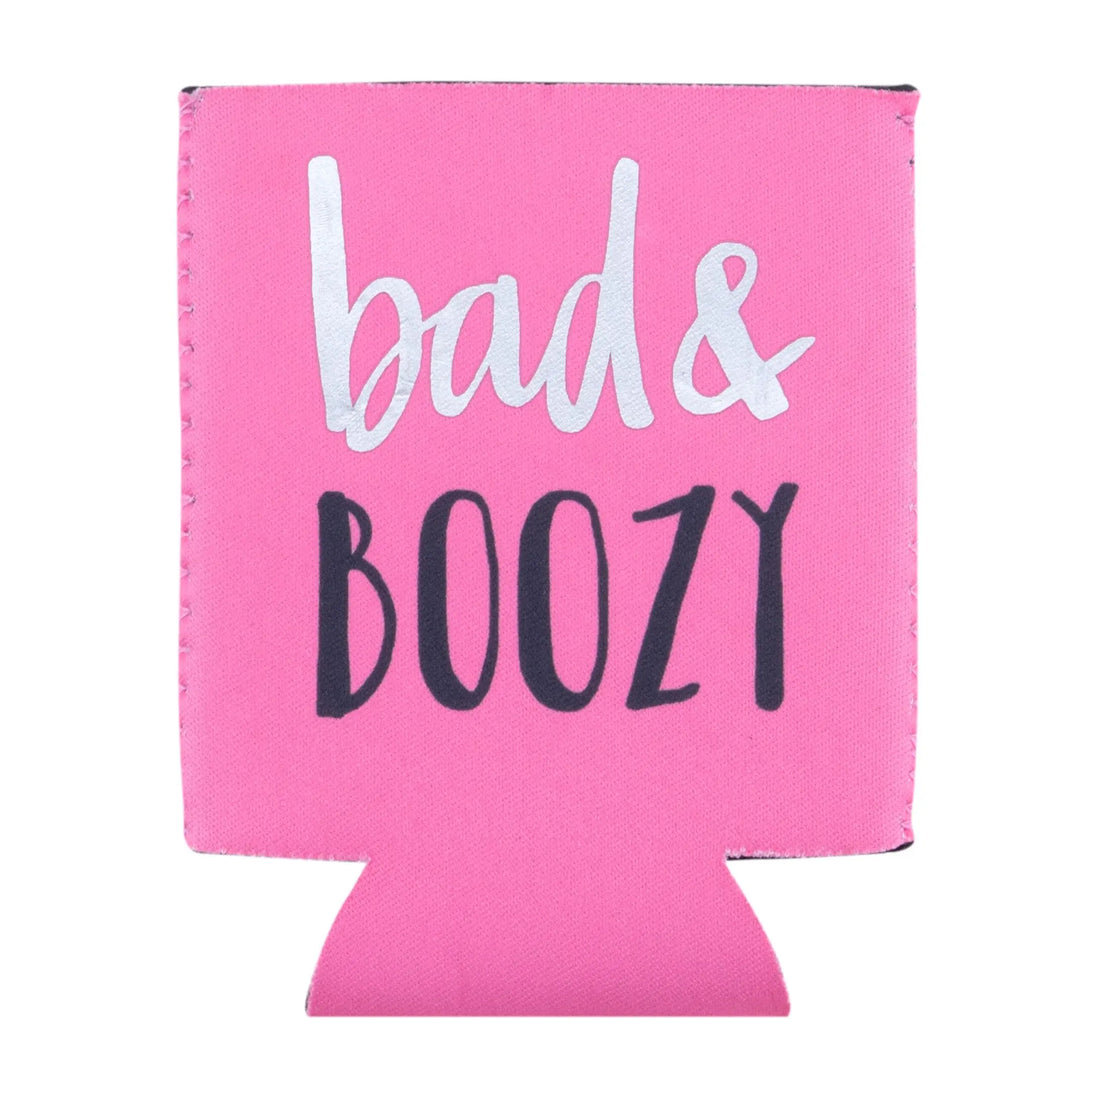 Bad & Boozy Koozie